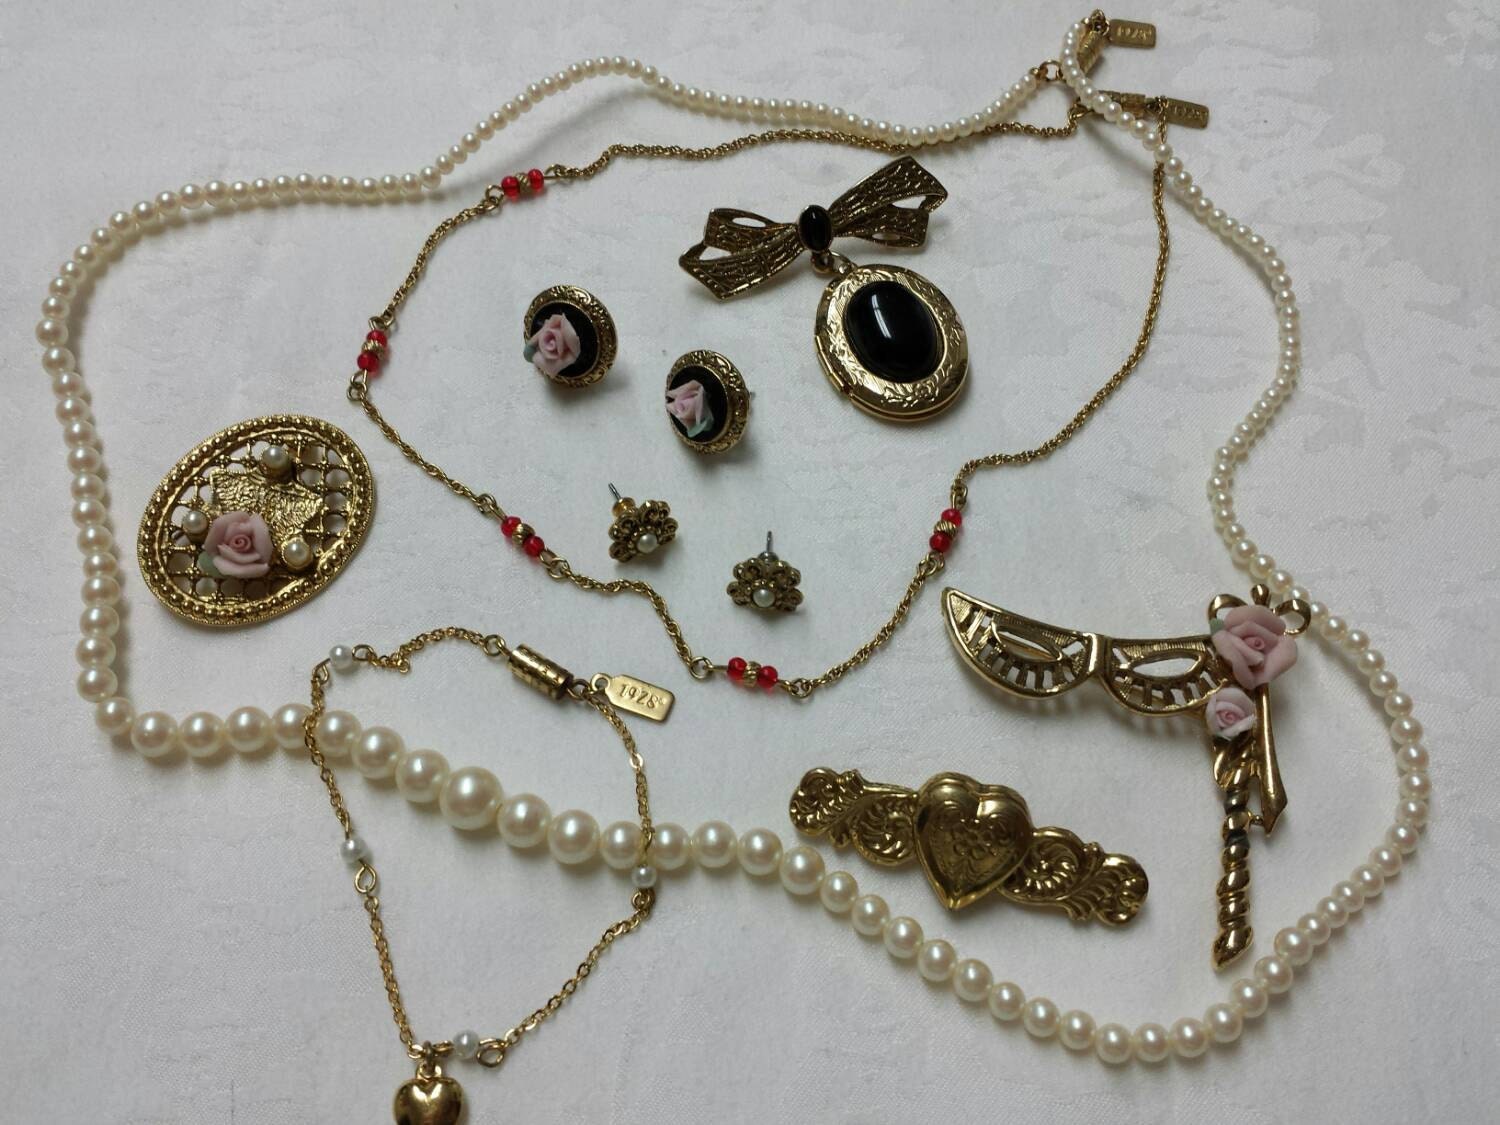 1928 Jewelry Company jewels